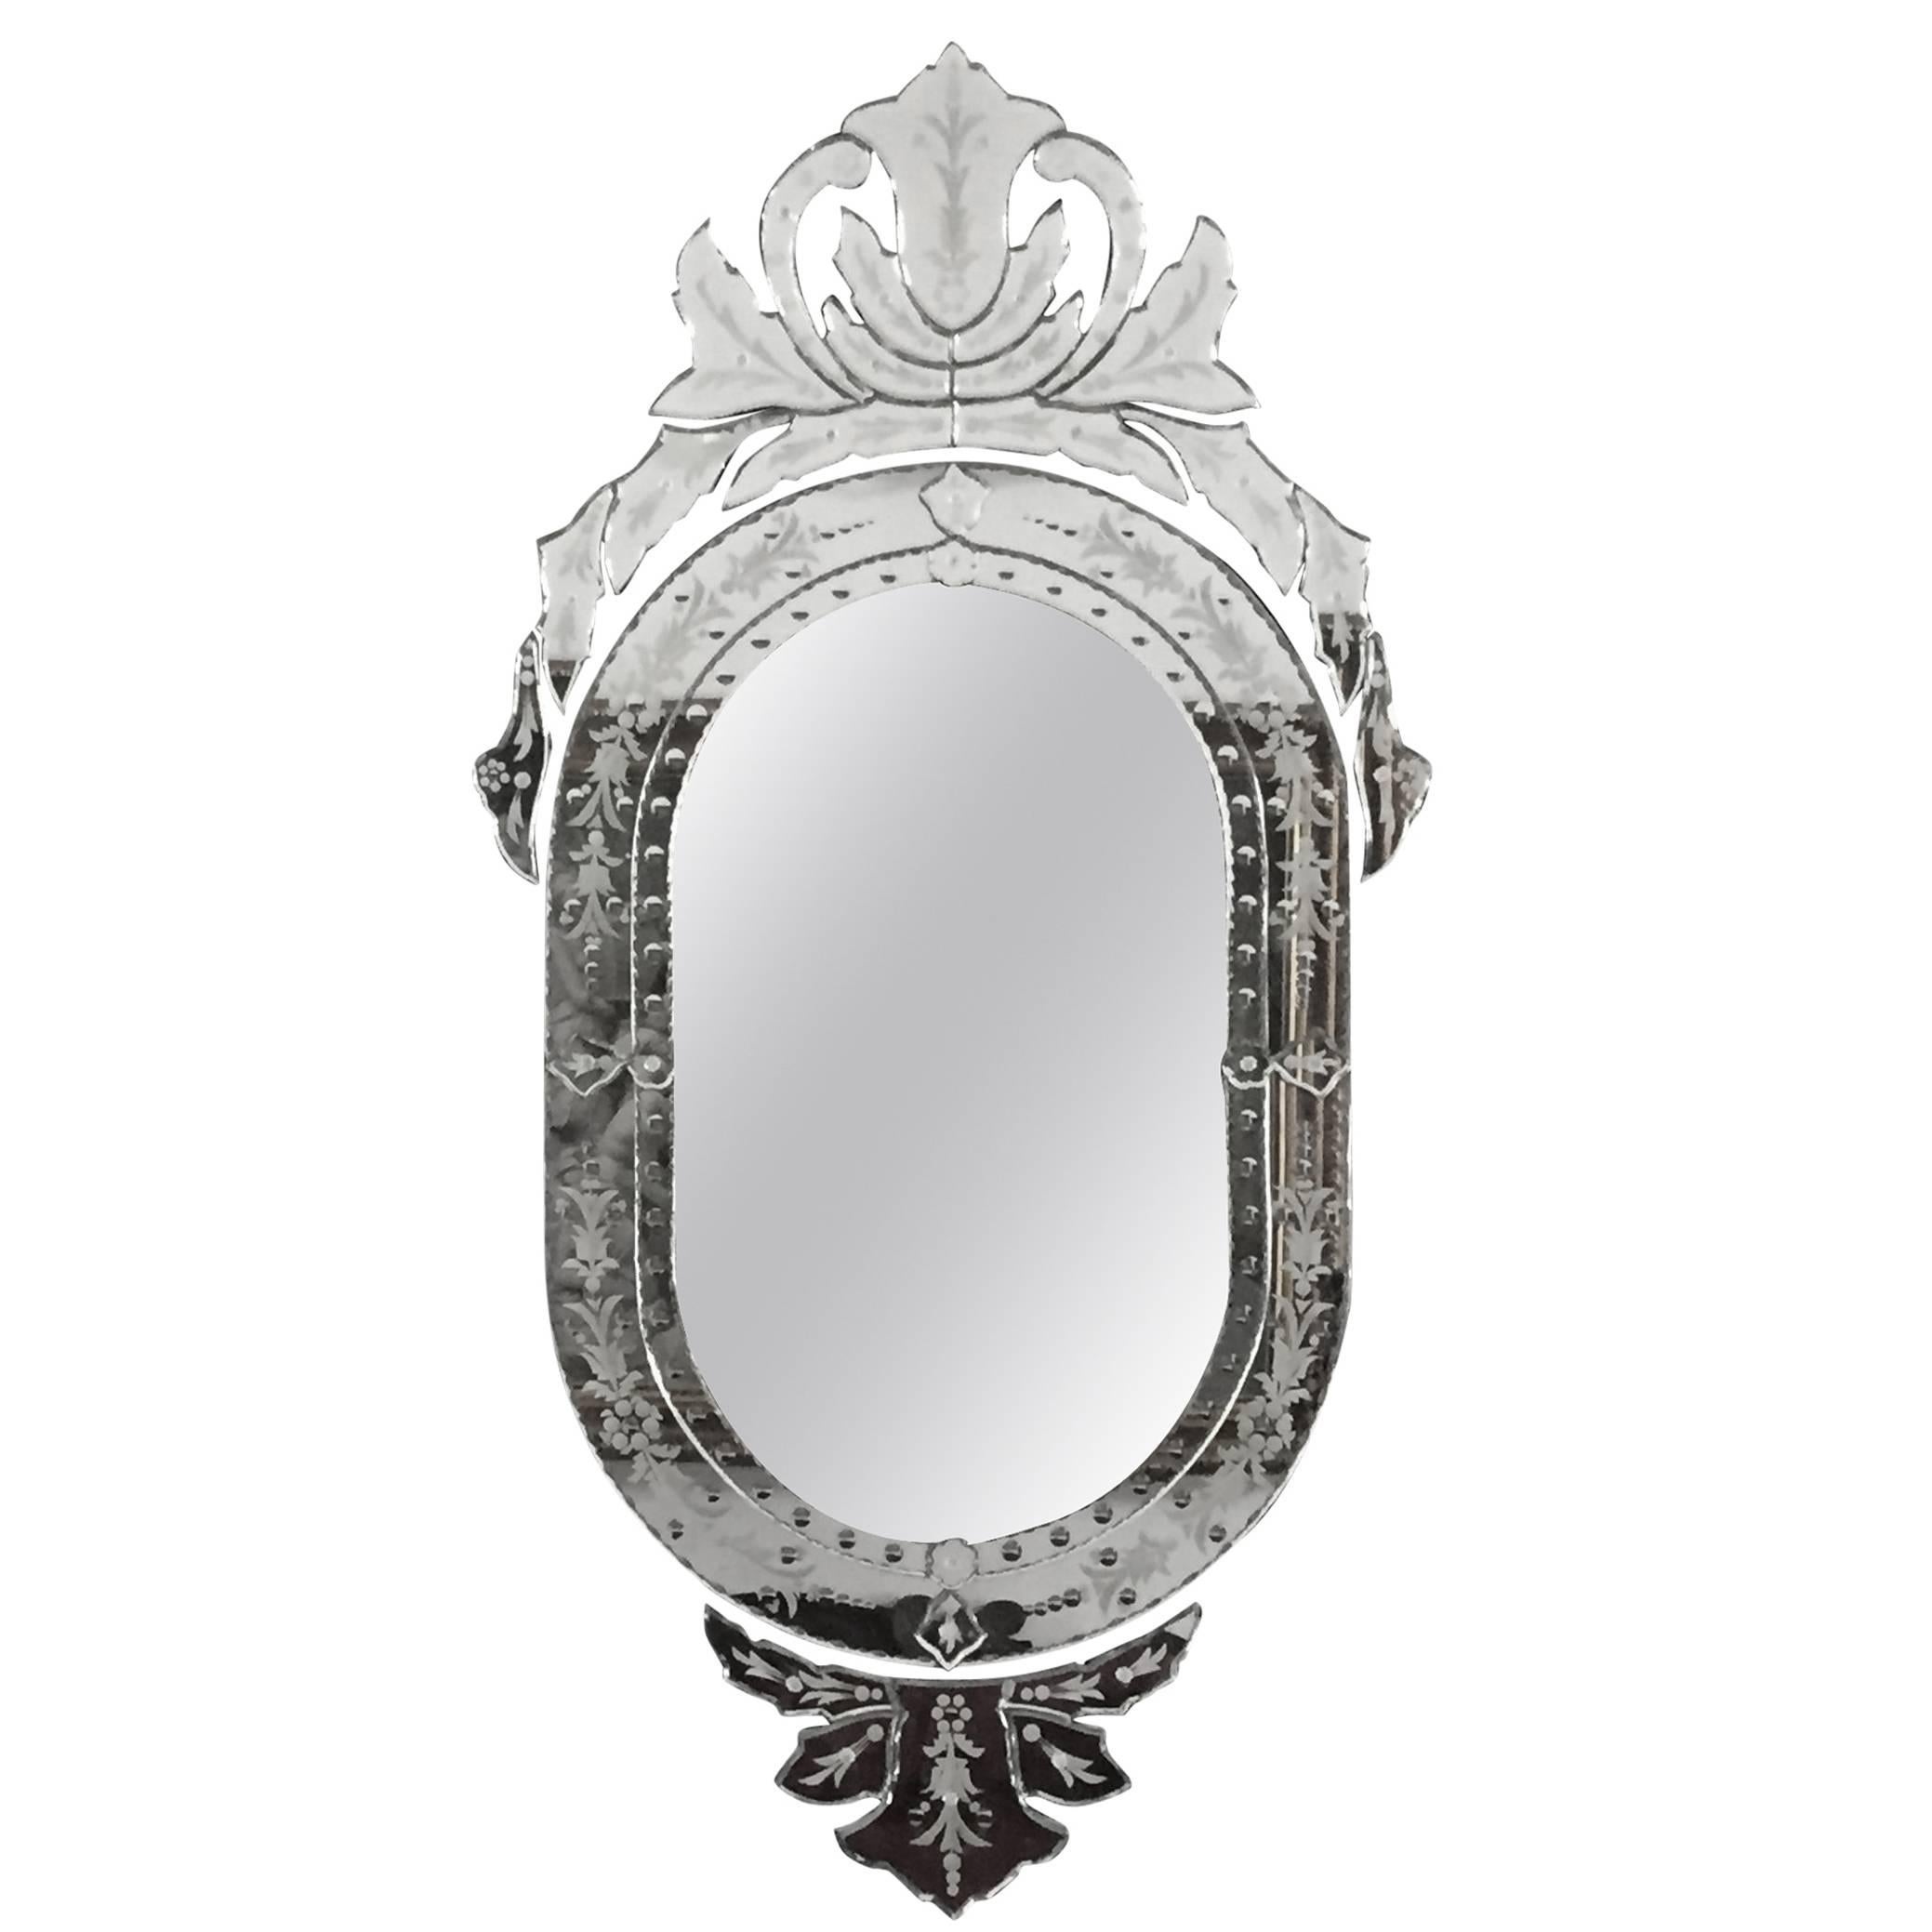 Beautiful Venetian Mirror with crest